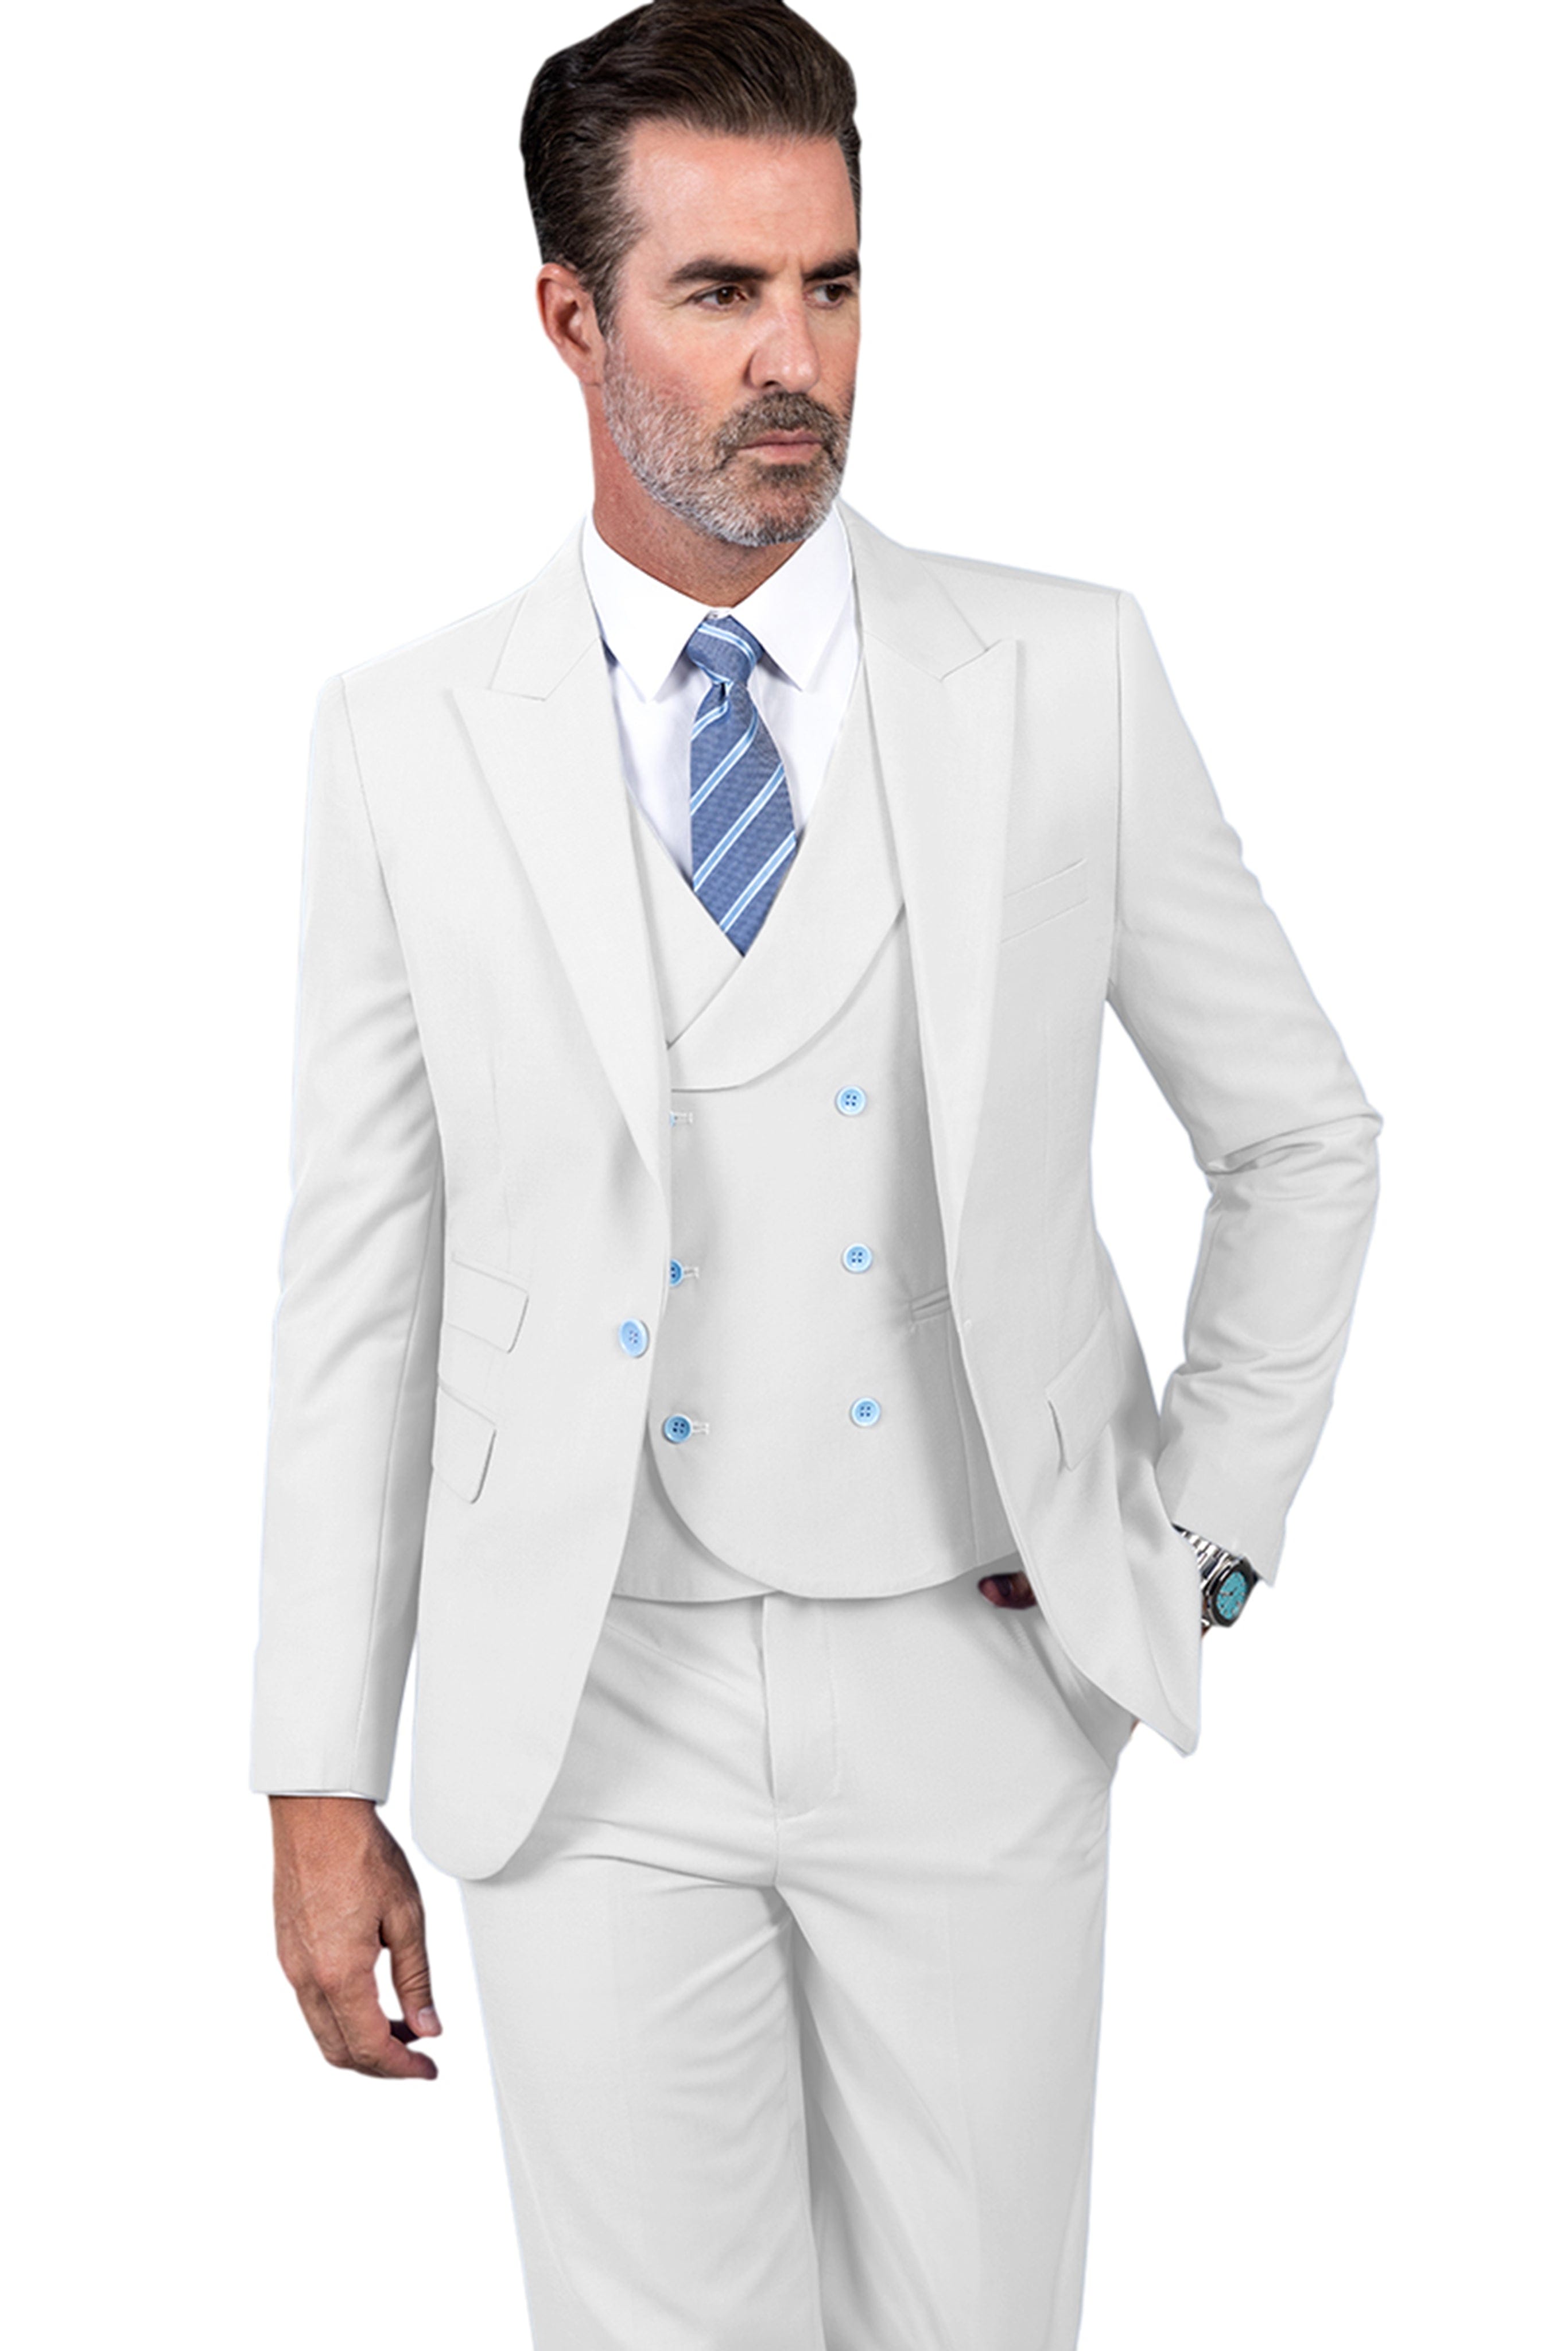 ceehuteey Men's 3 Pieces Slim Peak Lapel Regular Fit suit (Blazer+vest+Pants)